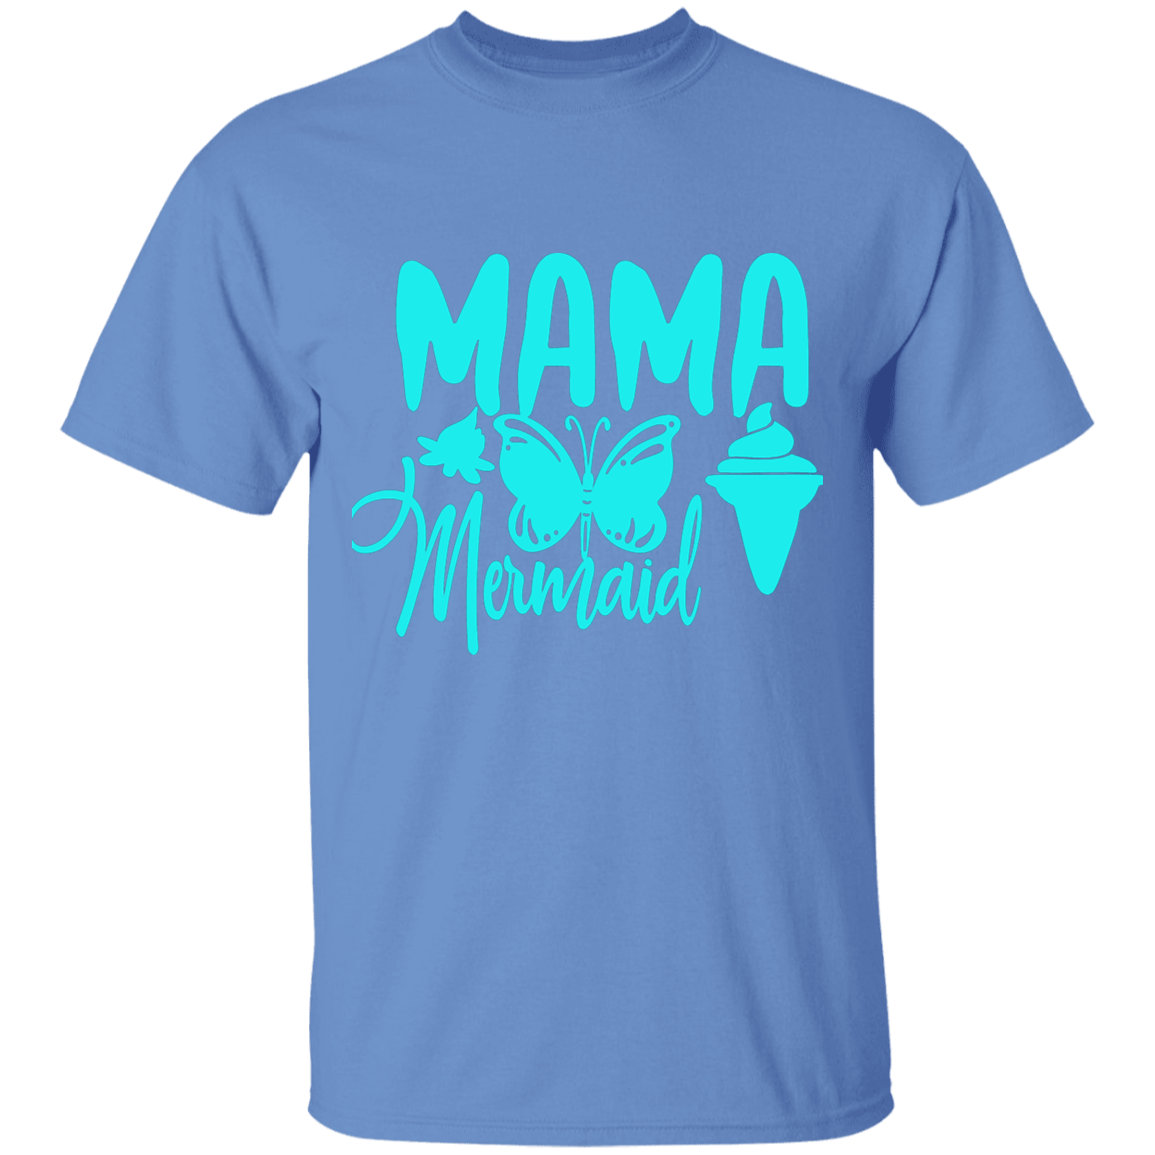 Mama Mermaid  T-Shirt